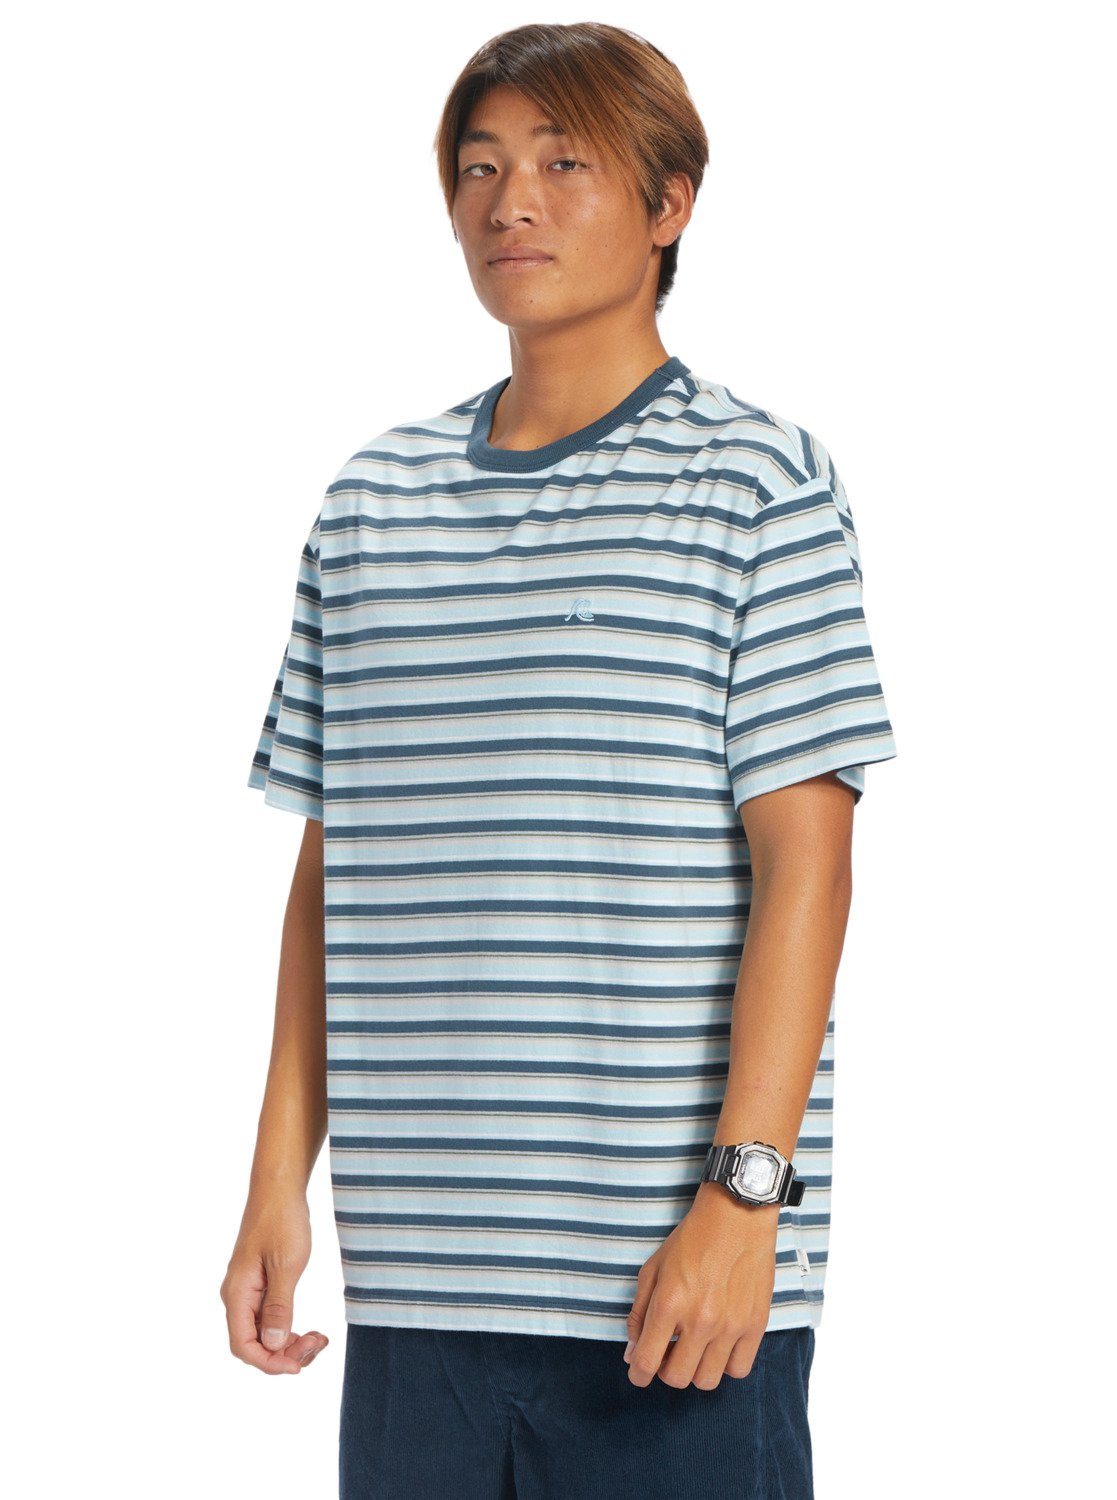 Quiksilver Joey T-Shirt Stripe